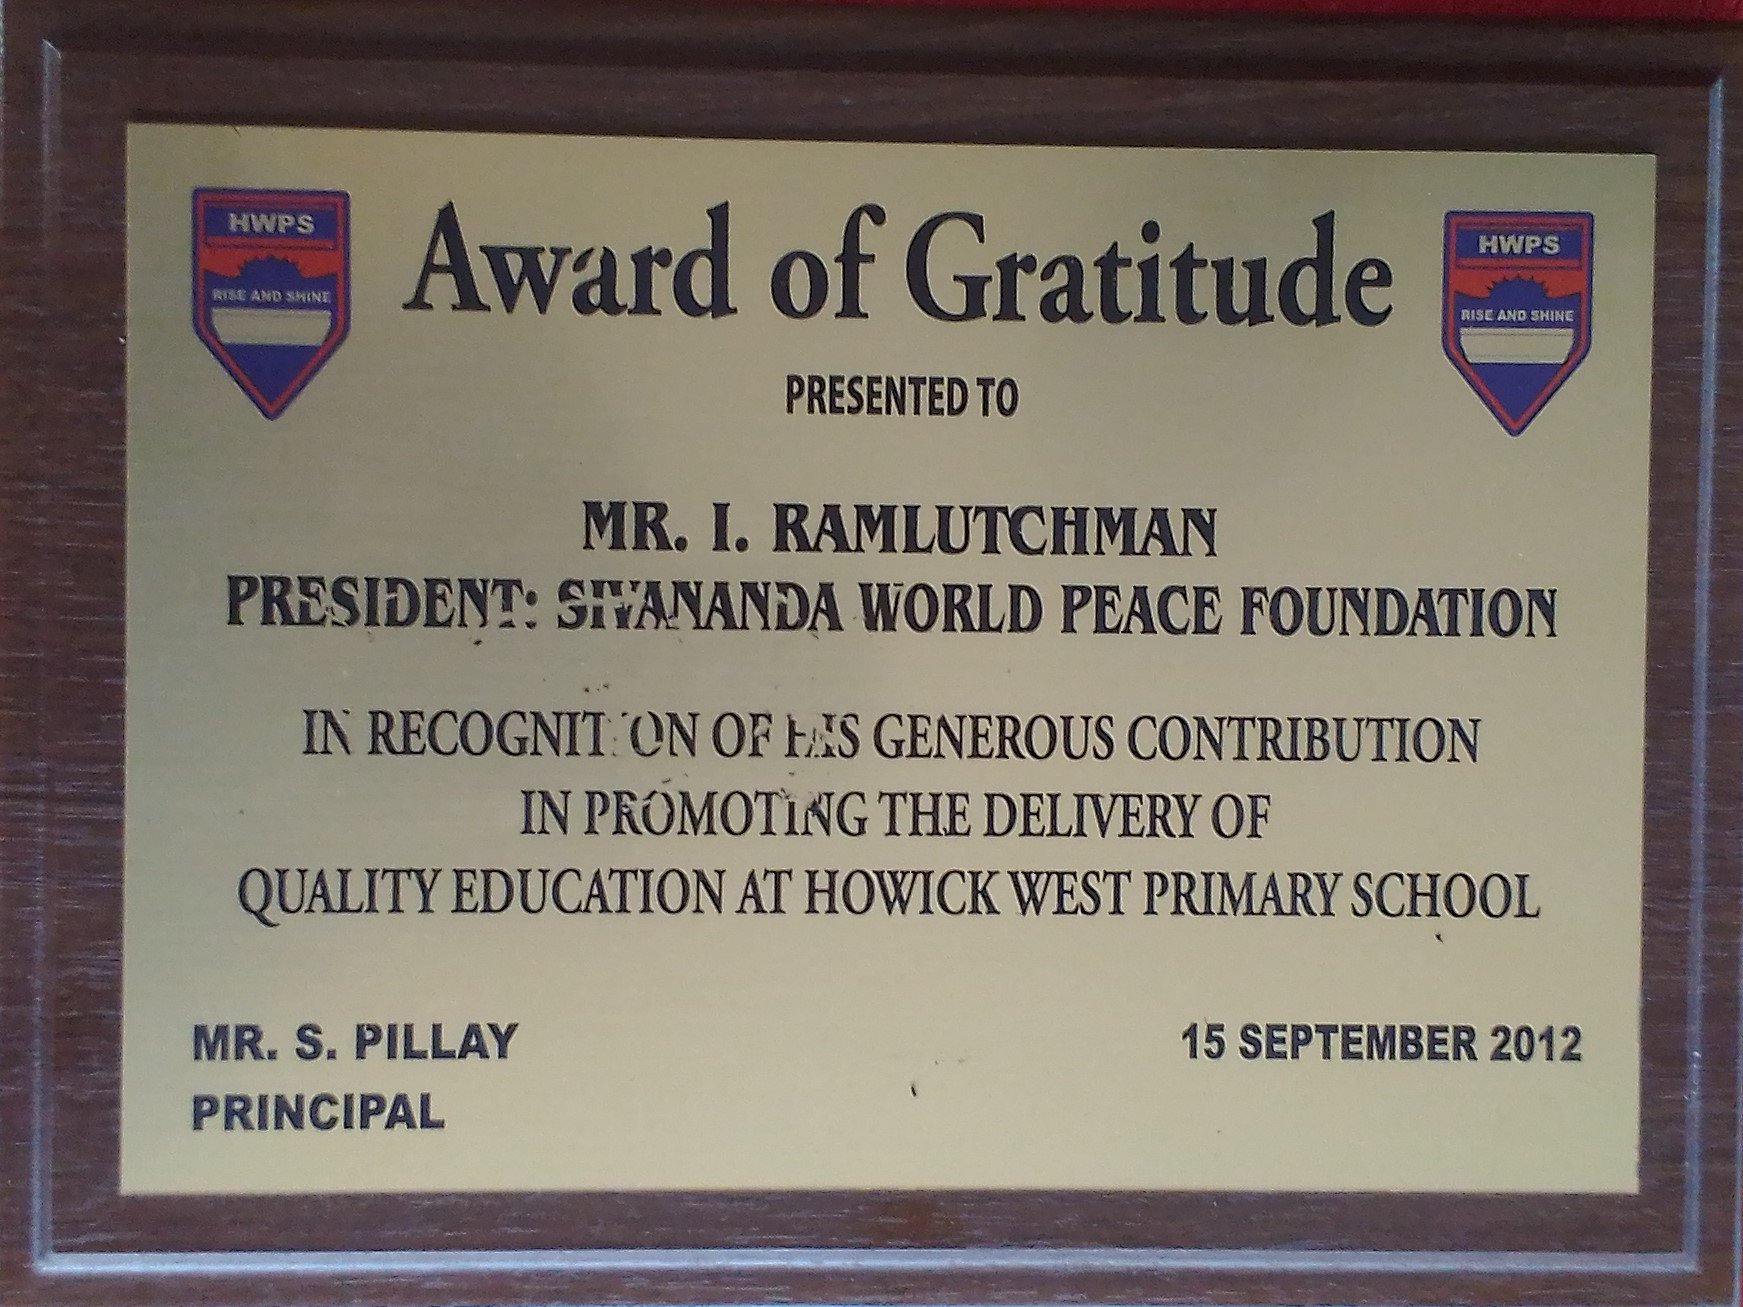 Award of Gratitude presemted by MR.S.PILLAY